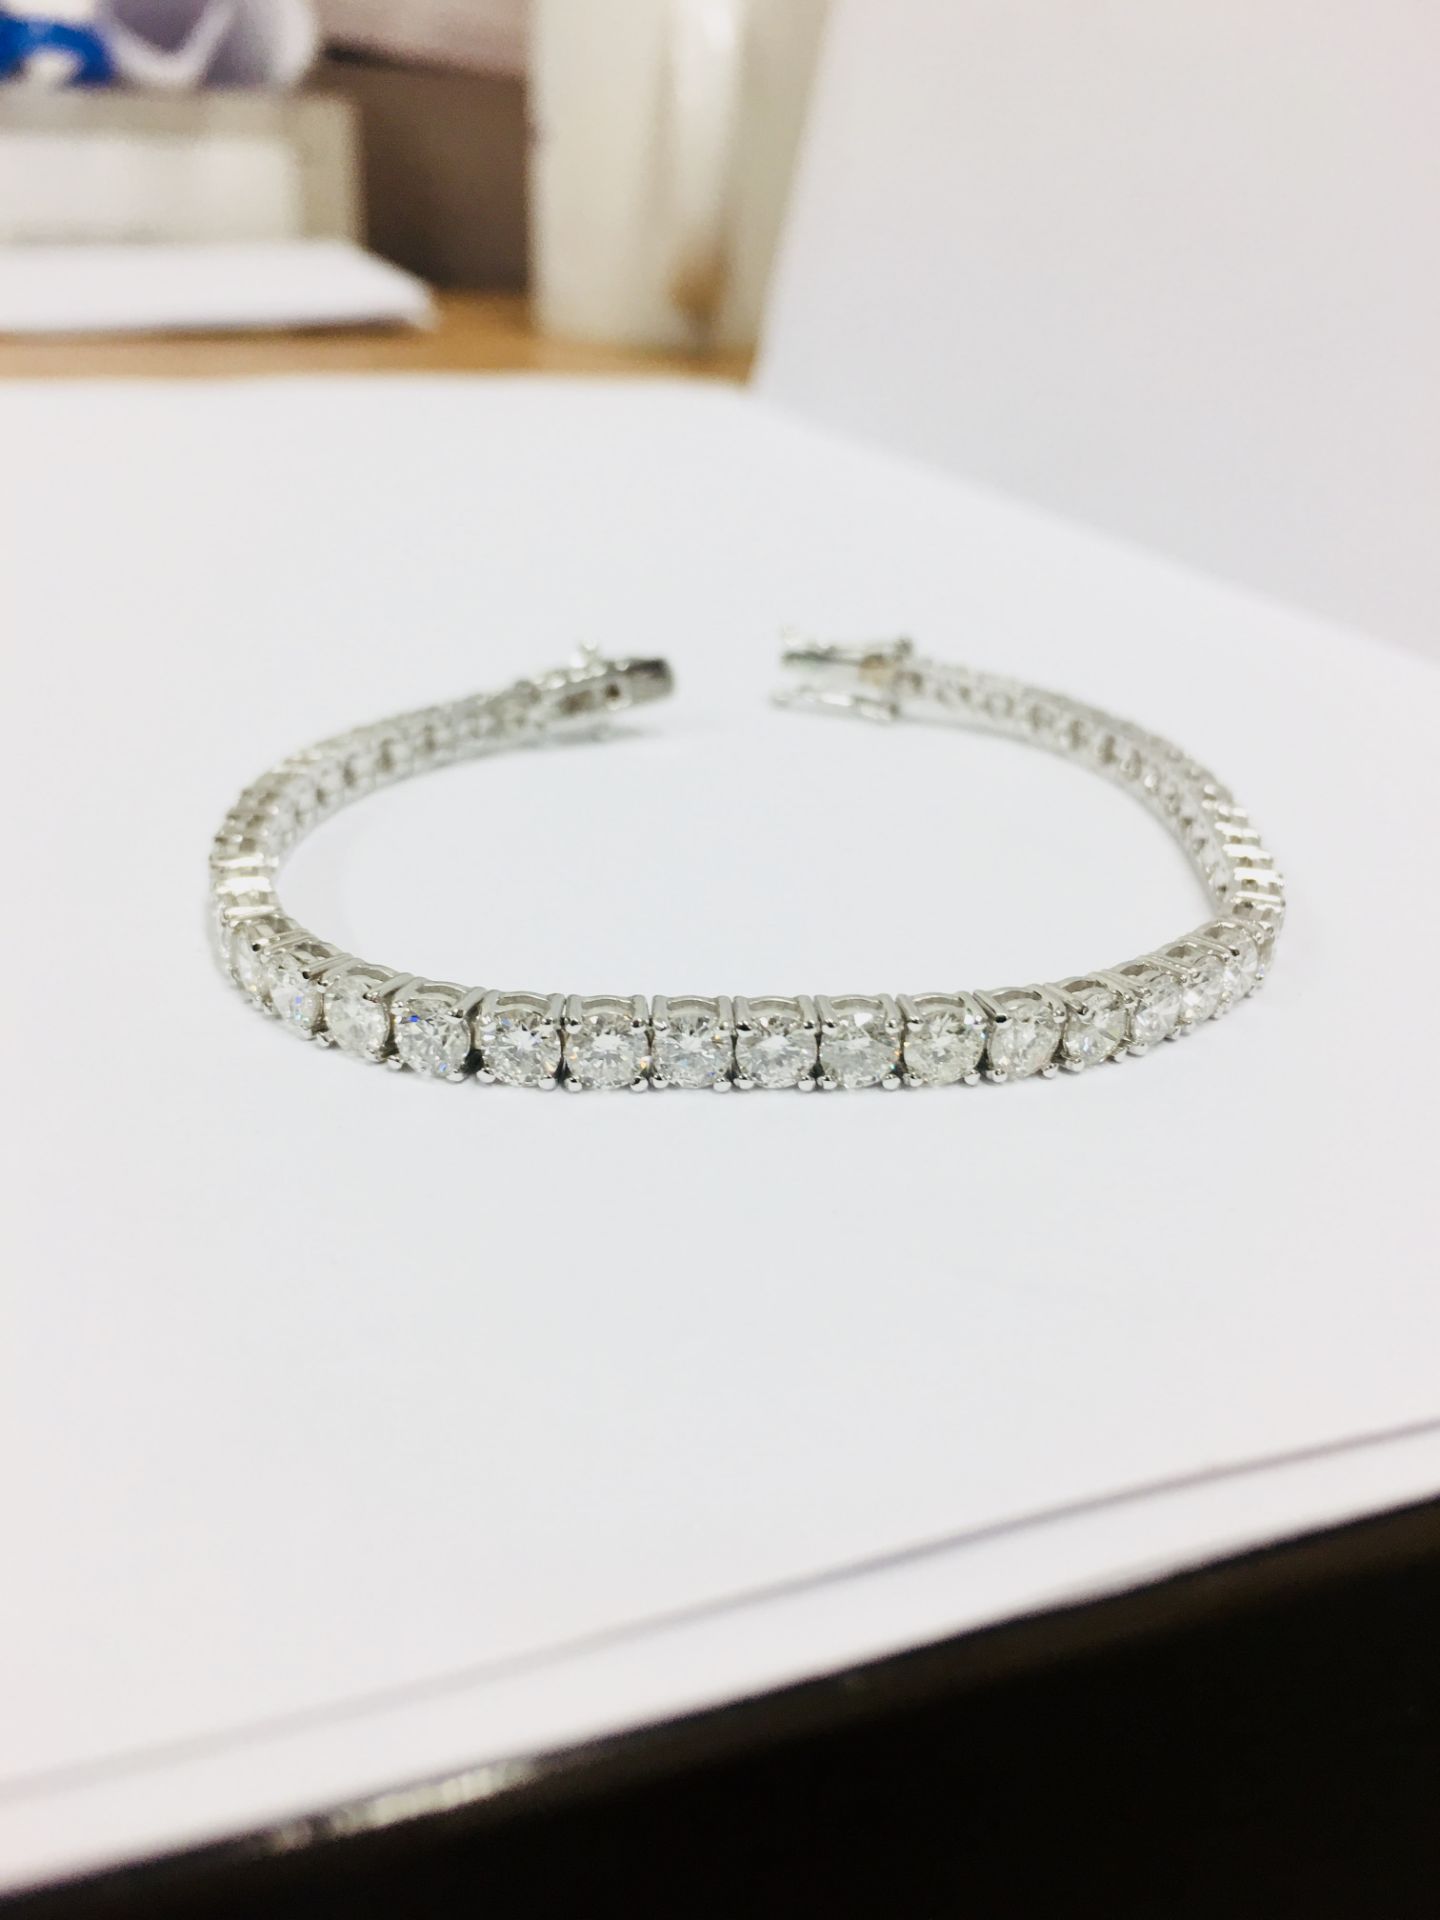 10.00Ct Diamond Tennis Bracelet Set With Brilliant Cut Diamonds Of H Colour, Si2-3 Clarity. - Image 16 of 26